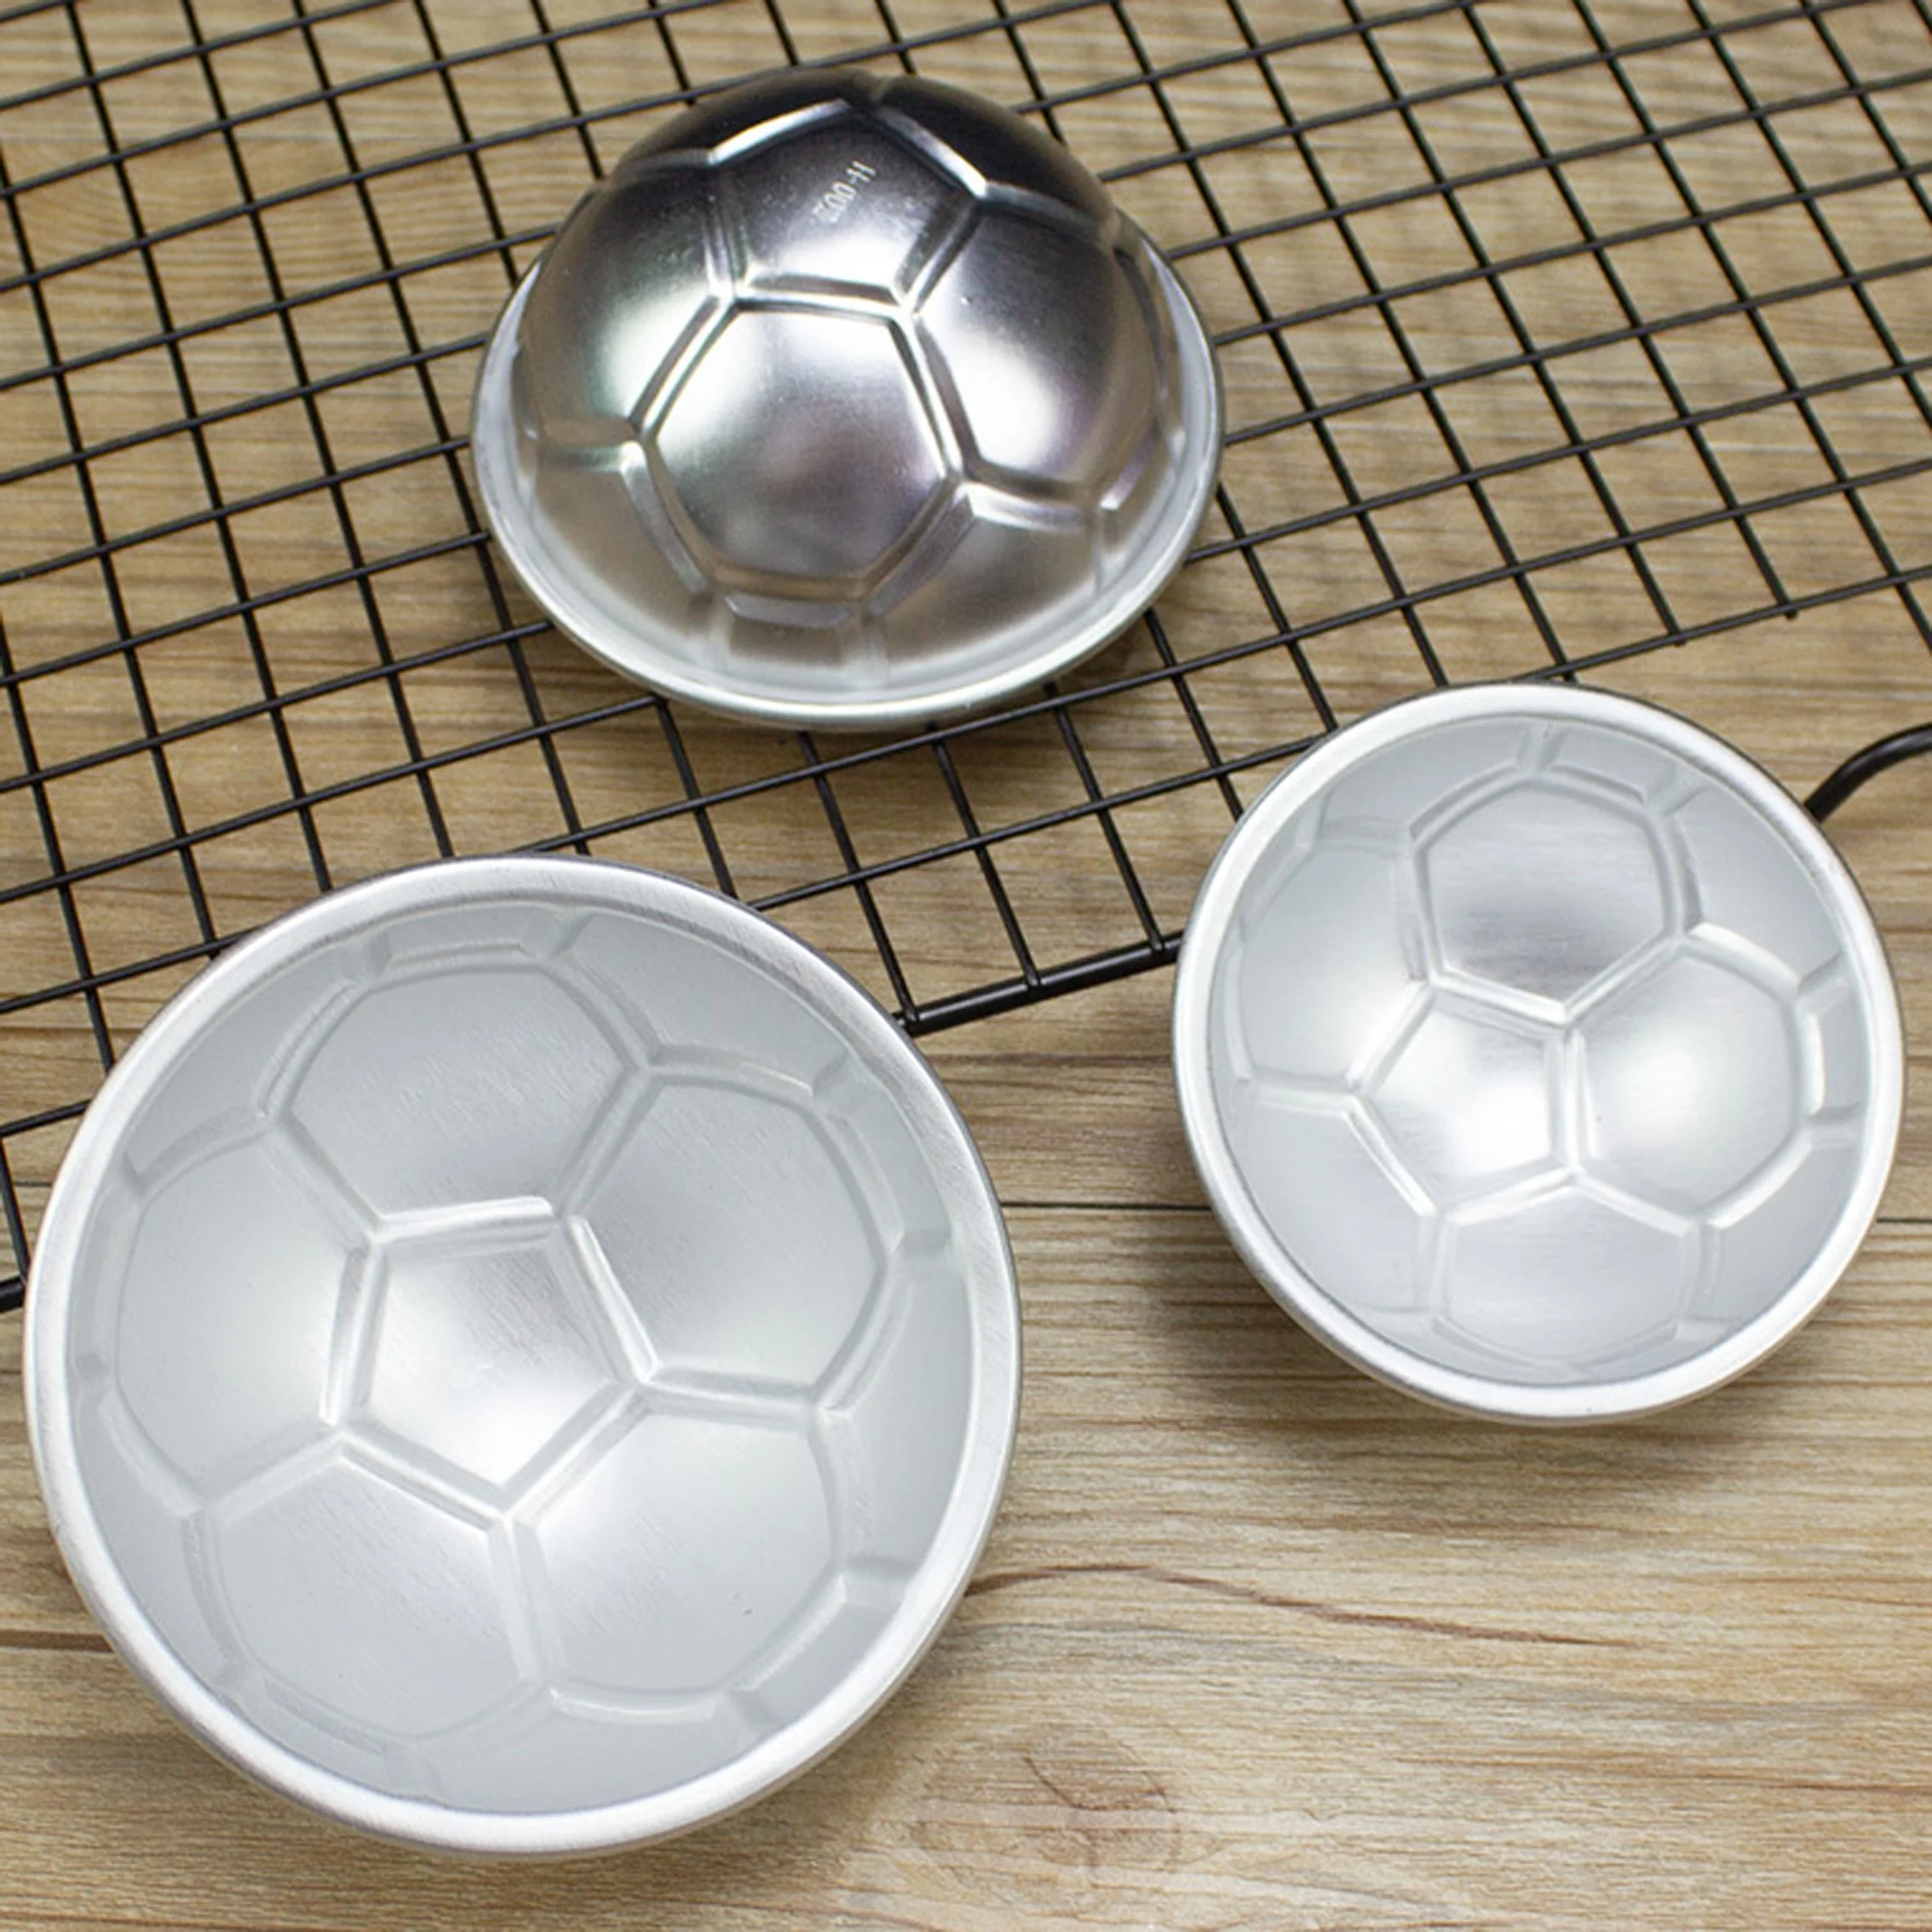 2023 New Design football 3D Aluminum Football Half Round Football Shaped Soccer Shaped cake Pan Baking Tools carbon baking tray